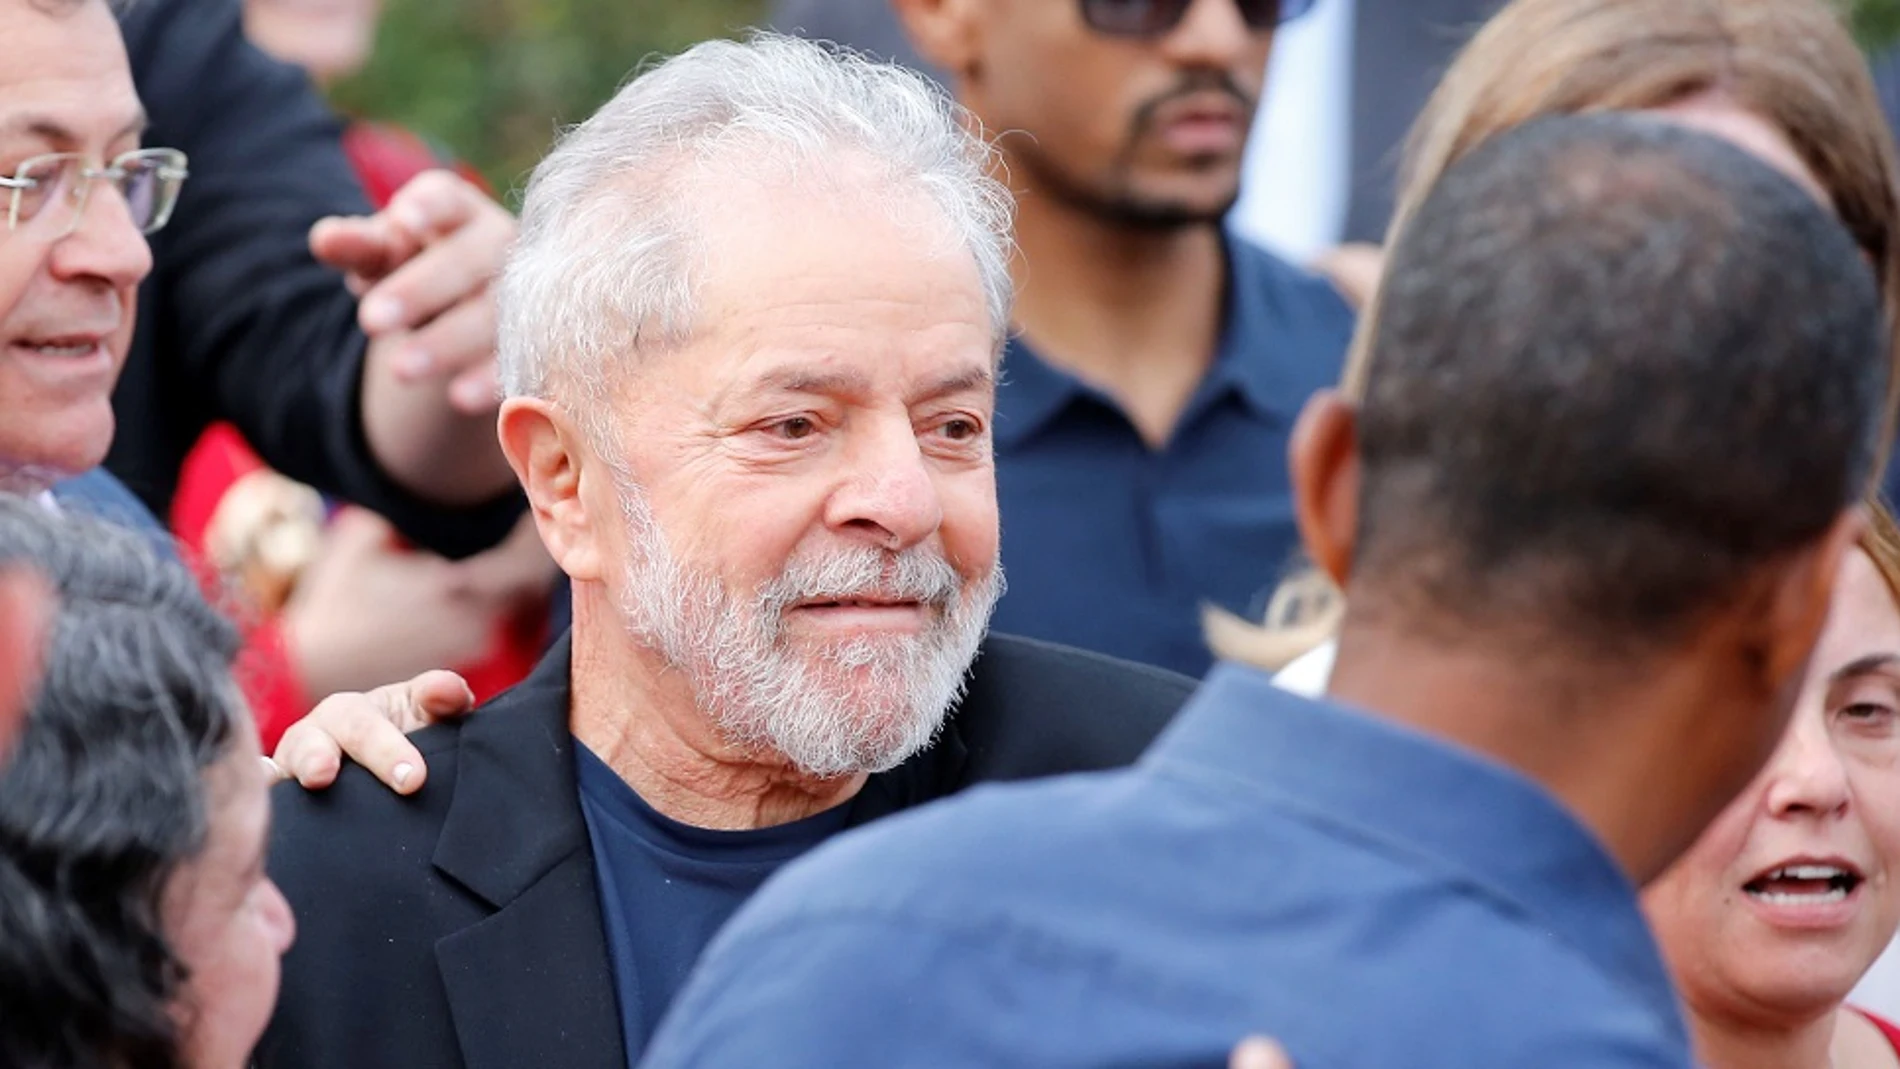 El expresidente brasileño Lula da Silva a su salida de prisión